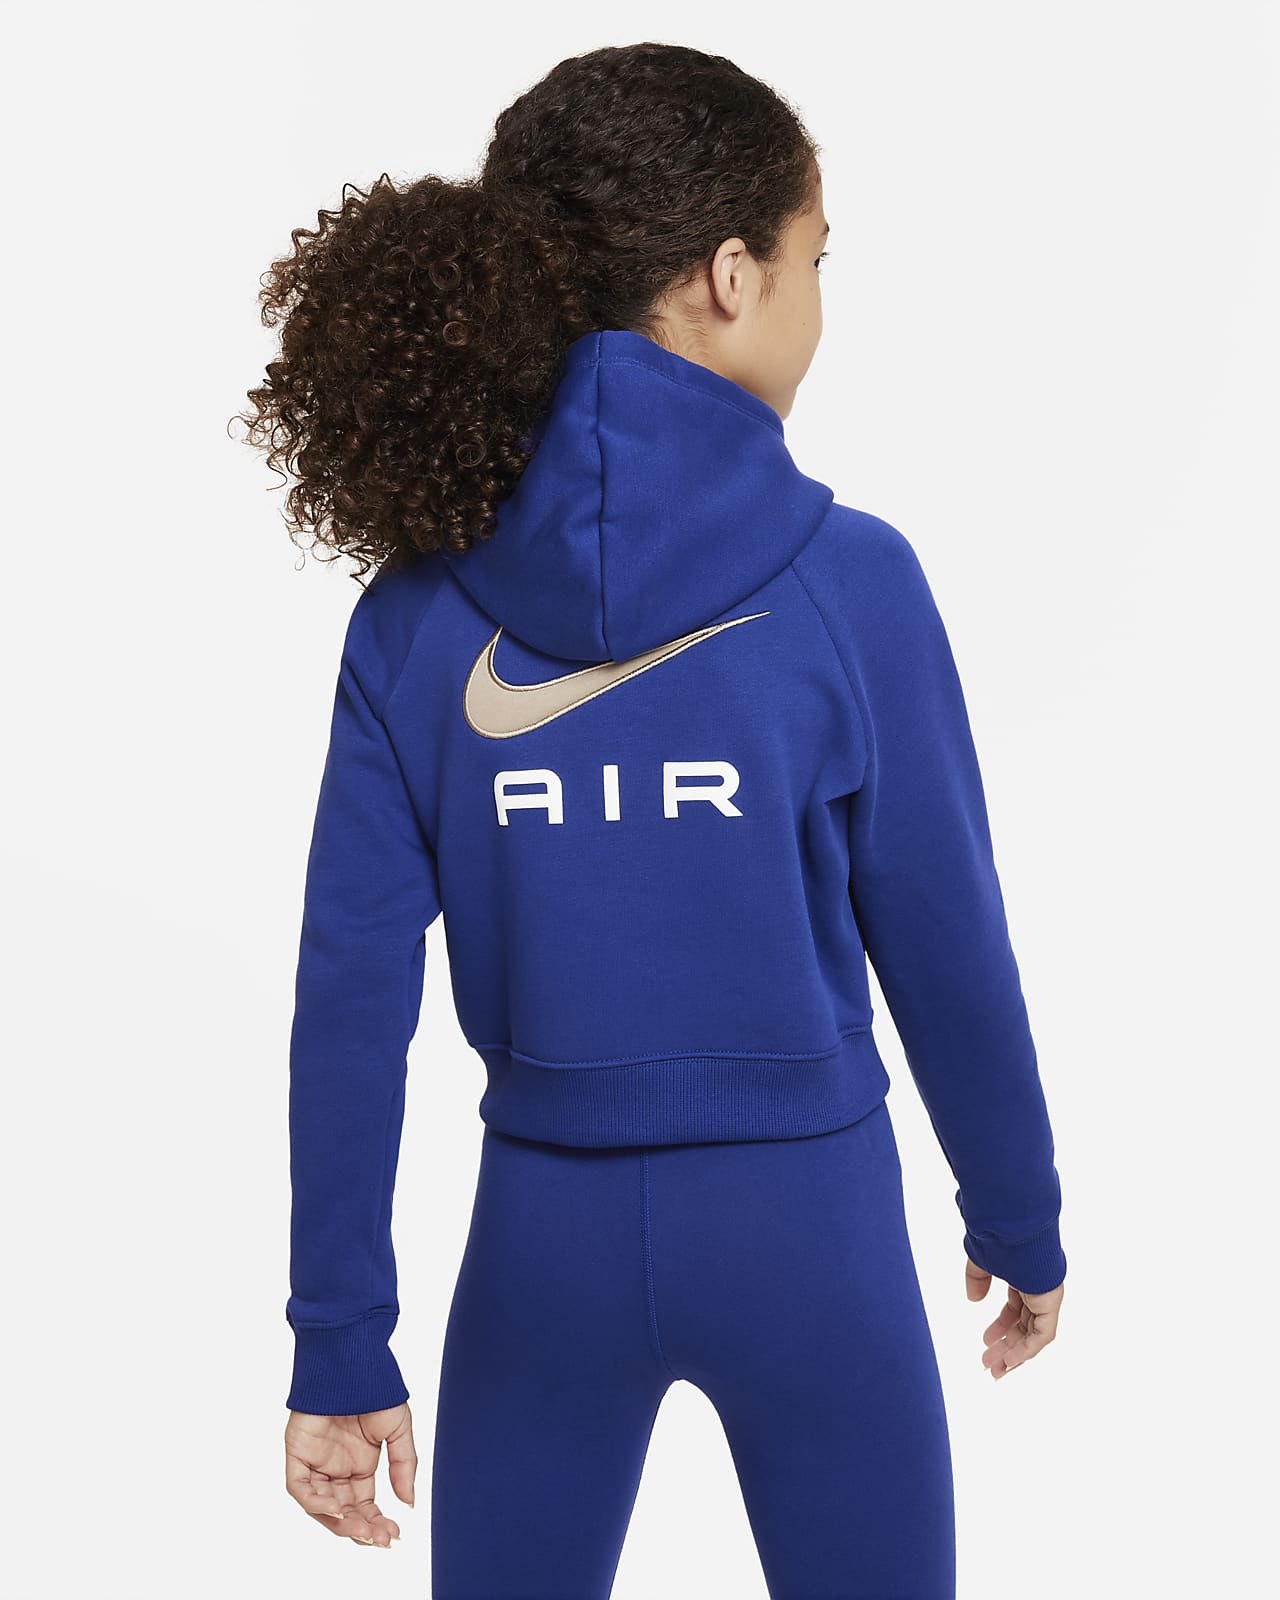 Air con capucha corta de tejido French terry - Niña. Nike